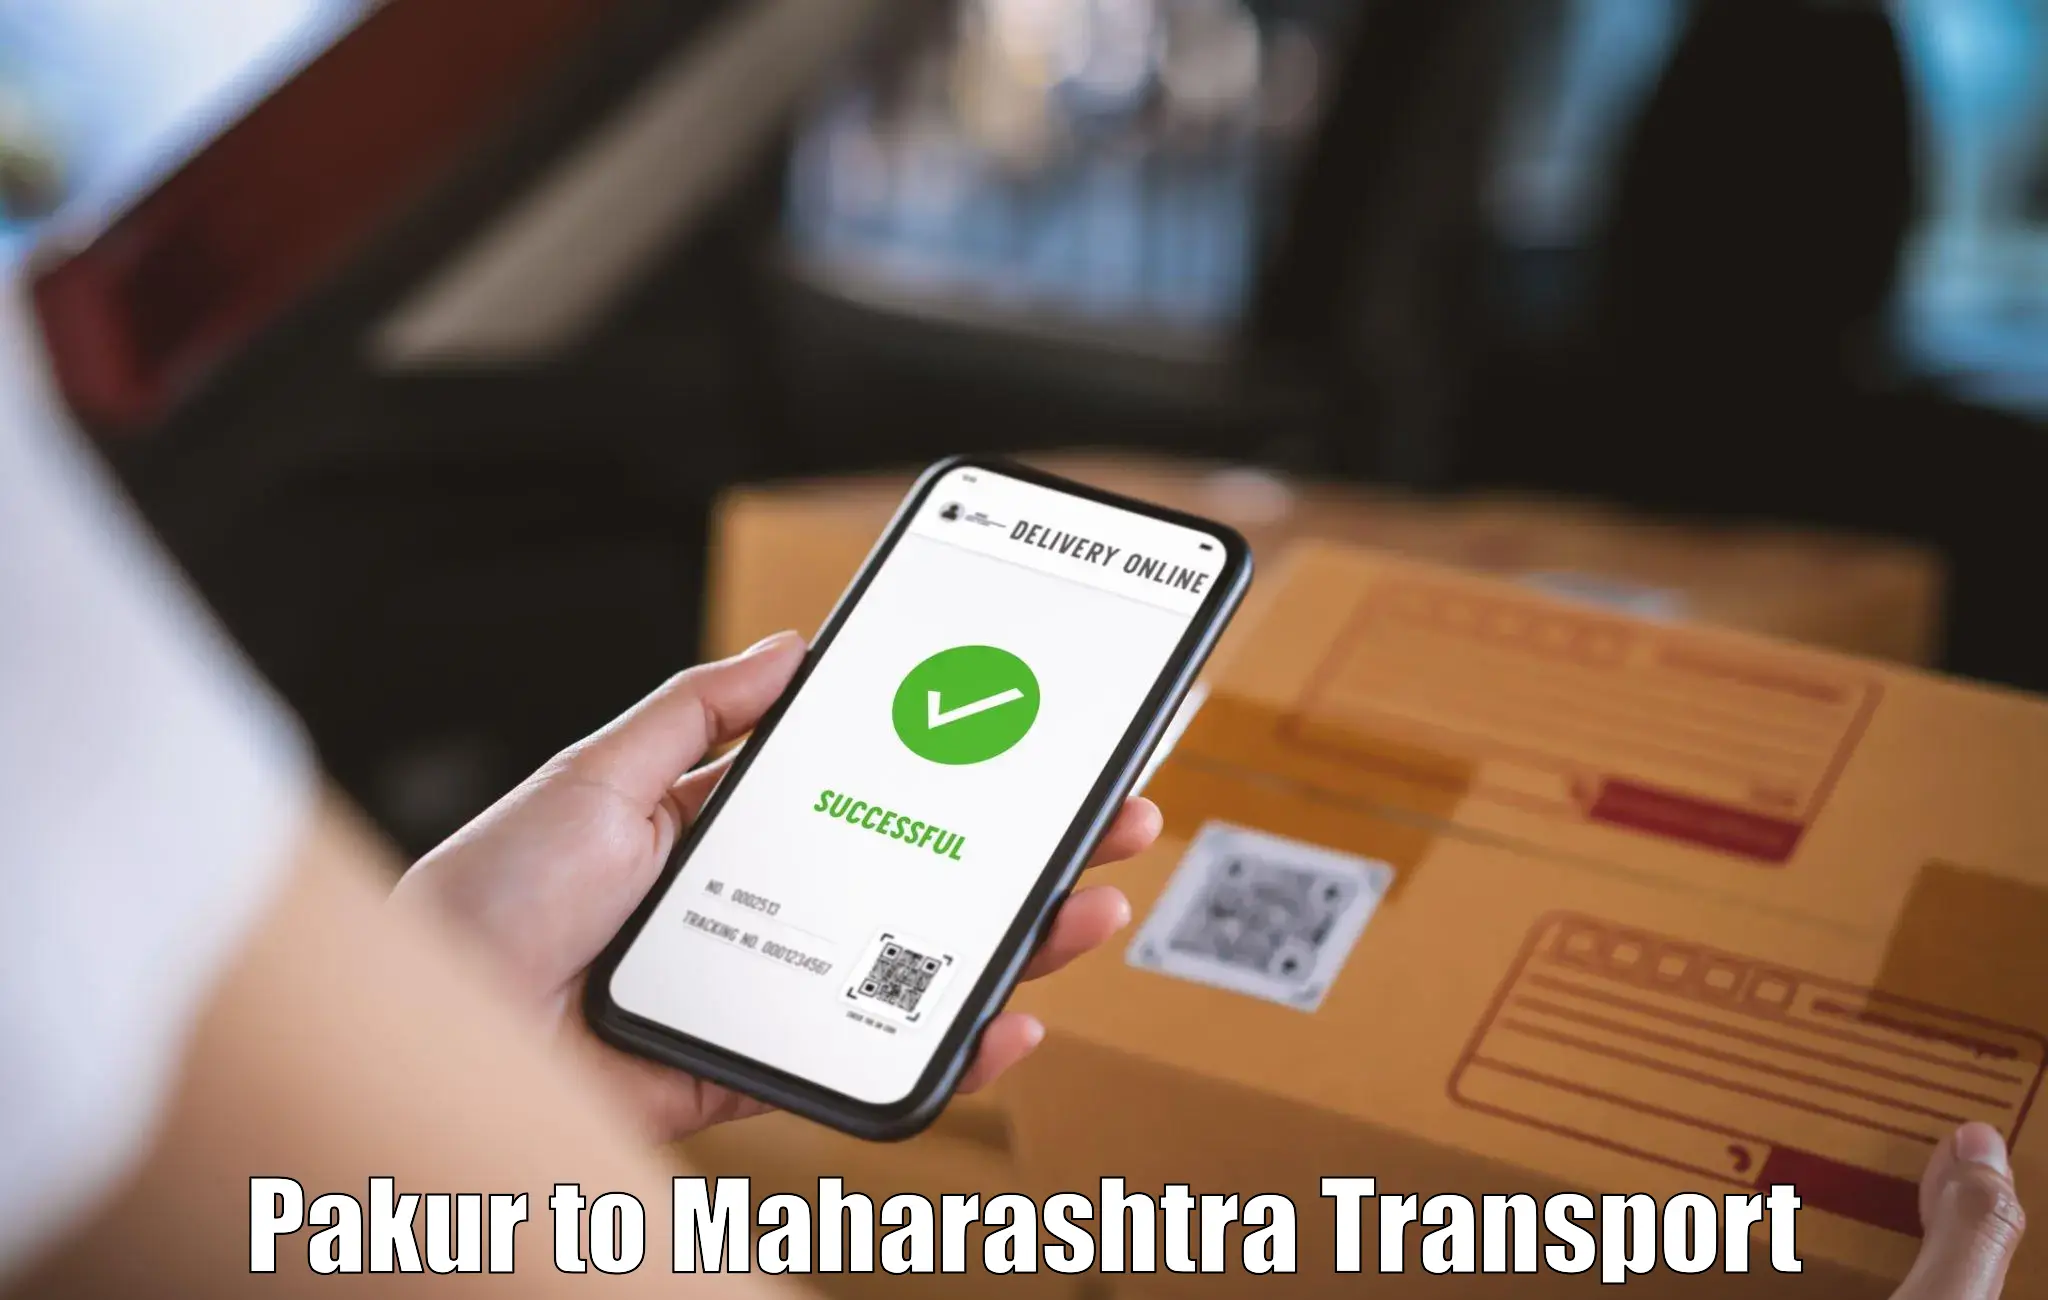 Shipping partner Pakur to Maharashtra